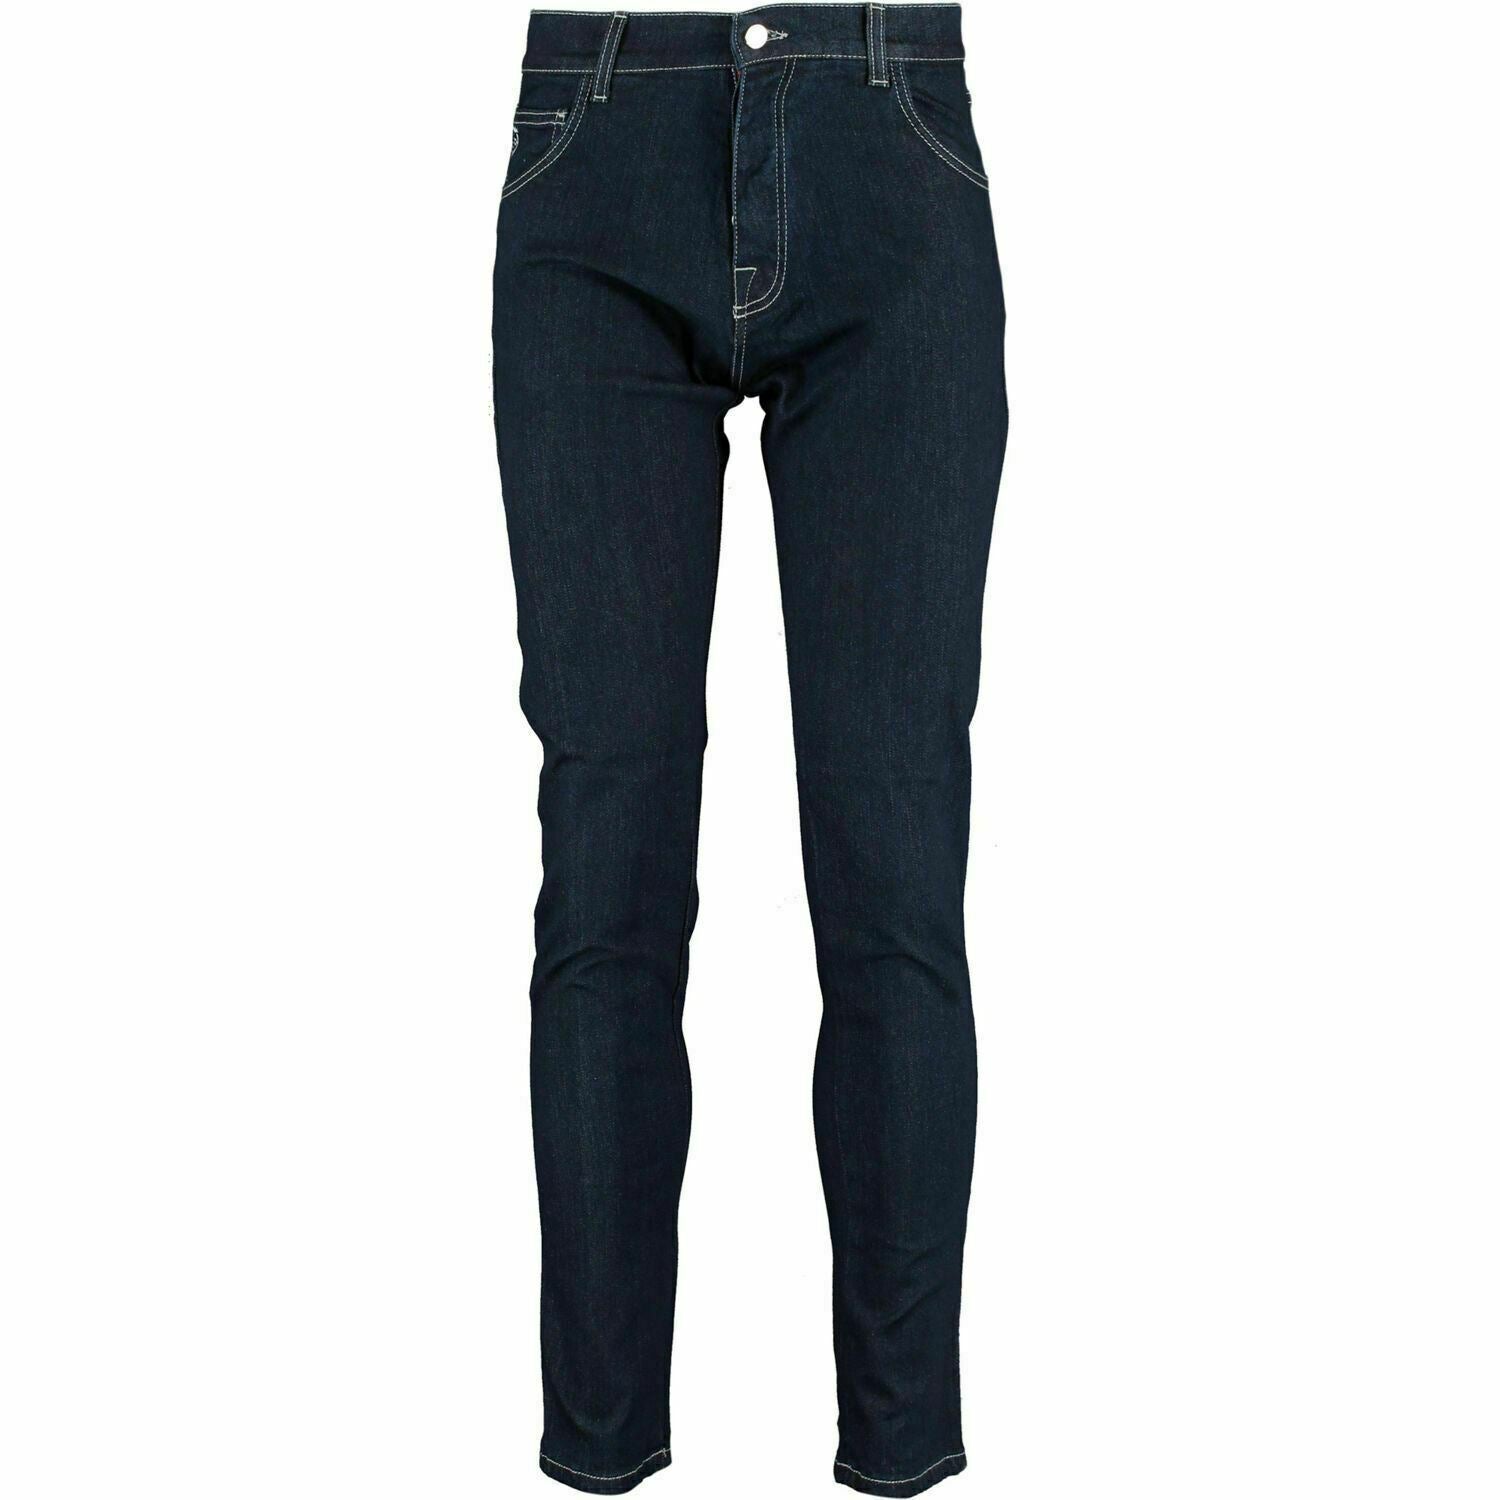 CASTELBAJAC Paris - Men's Dark Blue Modern Fit Jeans, size W36